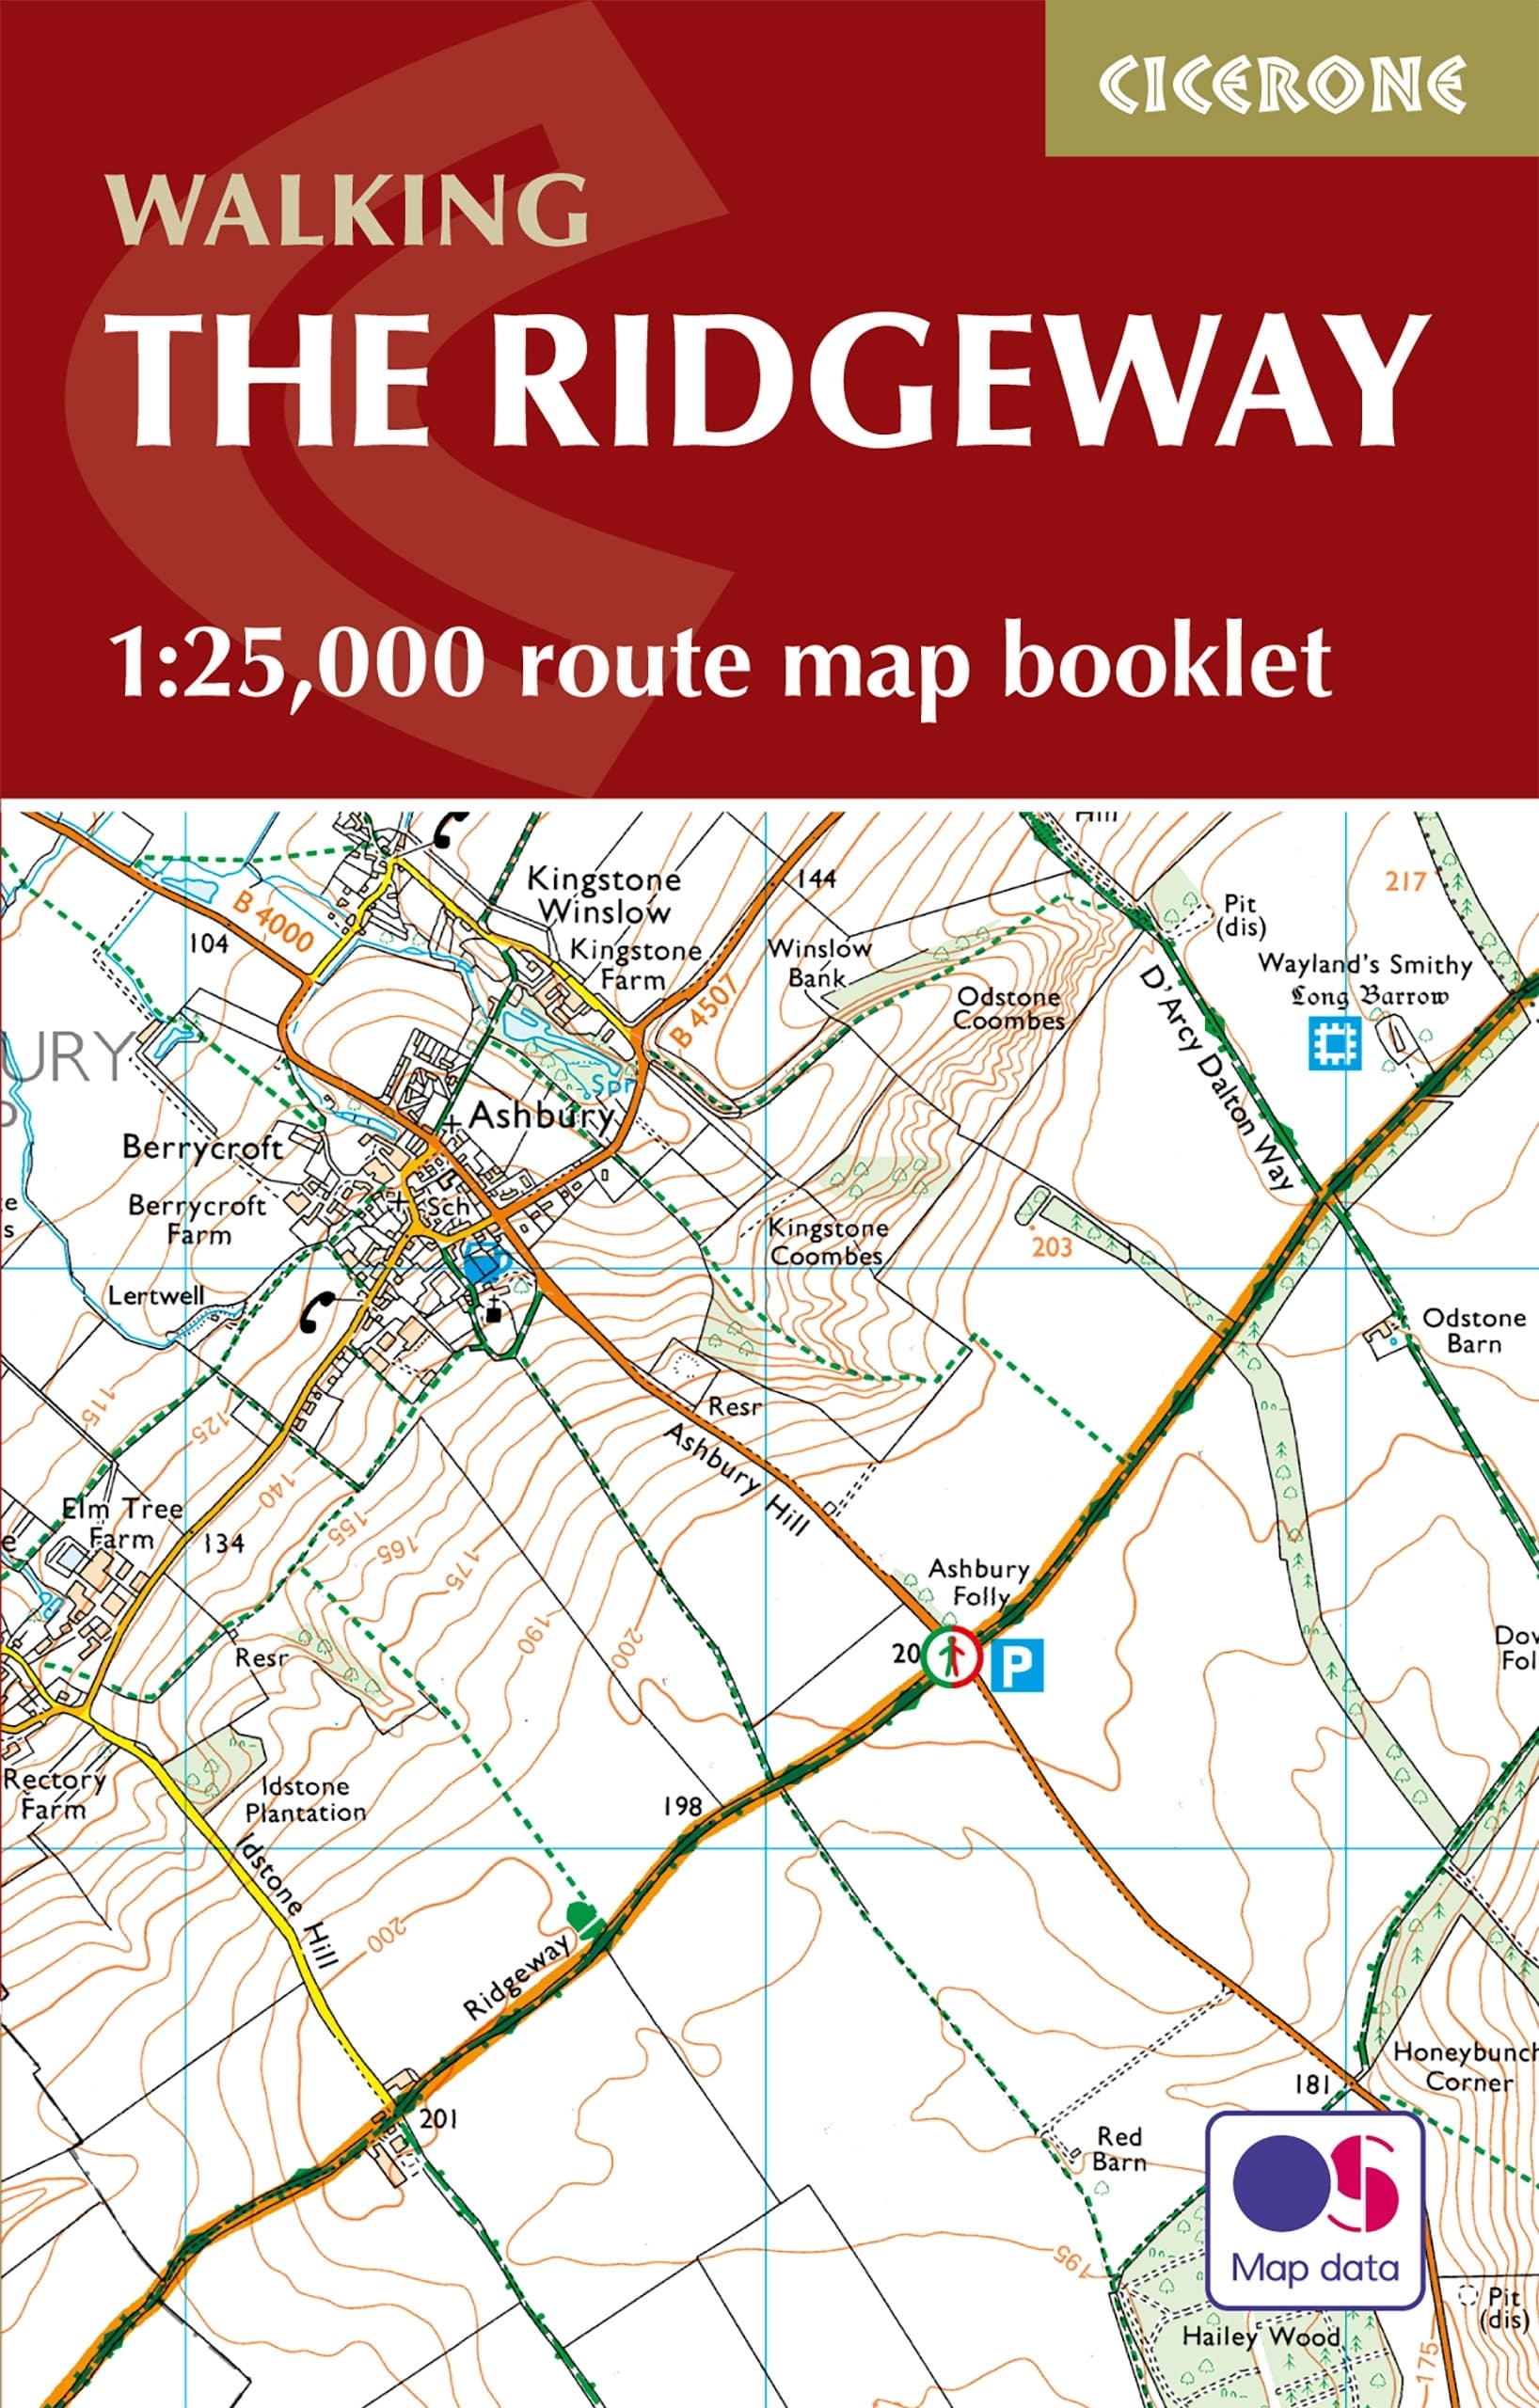 Online bestellen: Wandelatlas Ridgeway Map Booklet | Cicerone